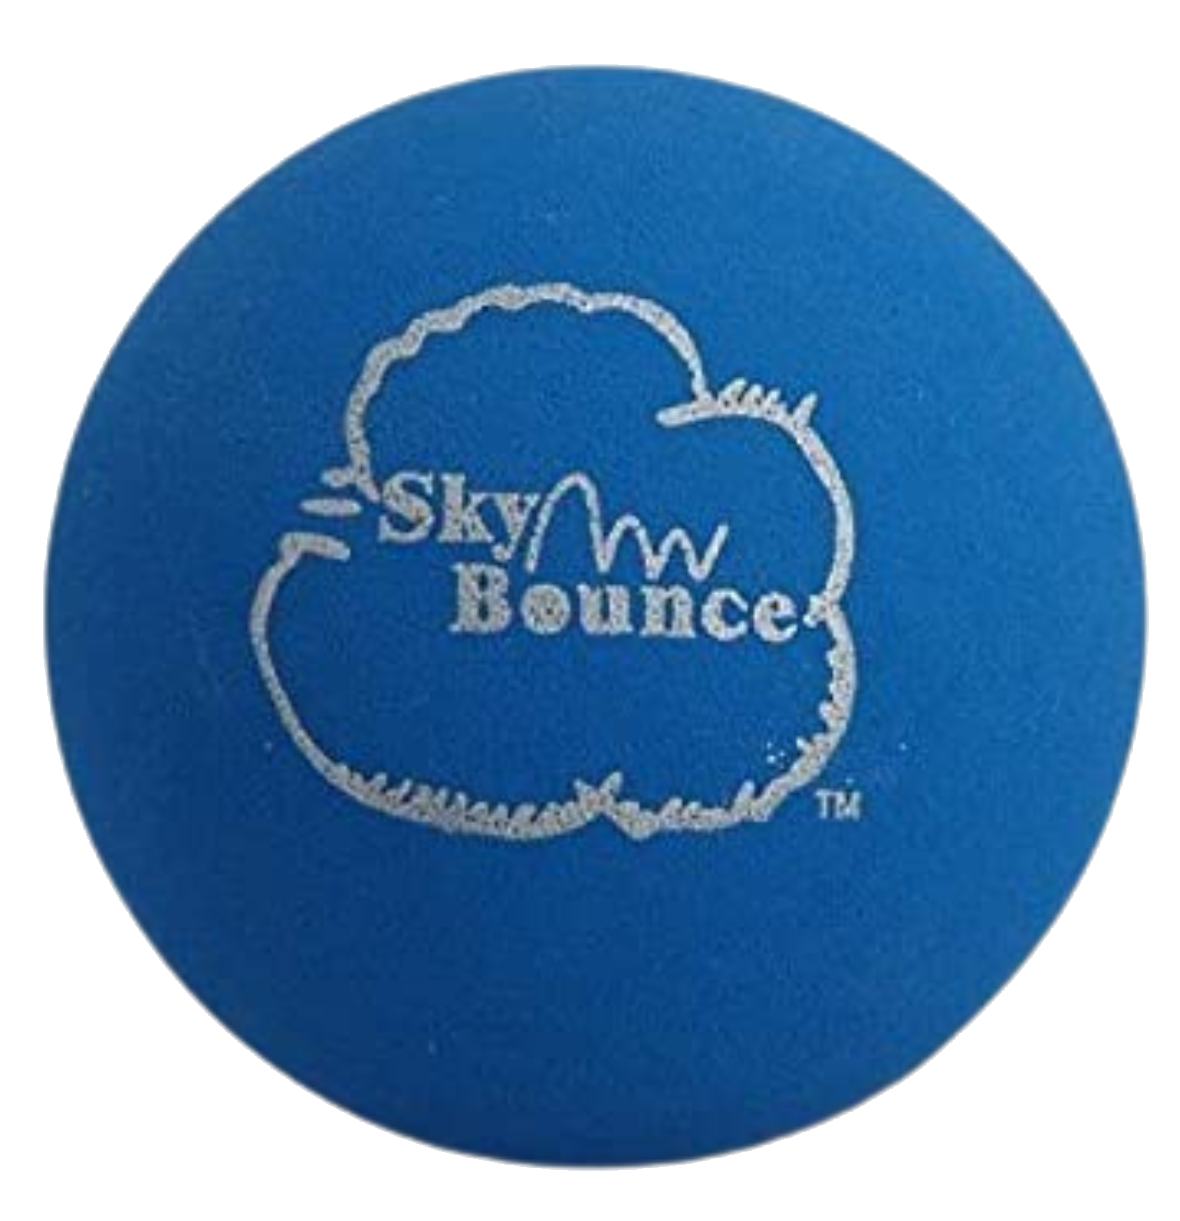  SKY Bounce Rubber HAND BALL Racquetball Stickball Catch Fetch Color Blue 